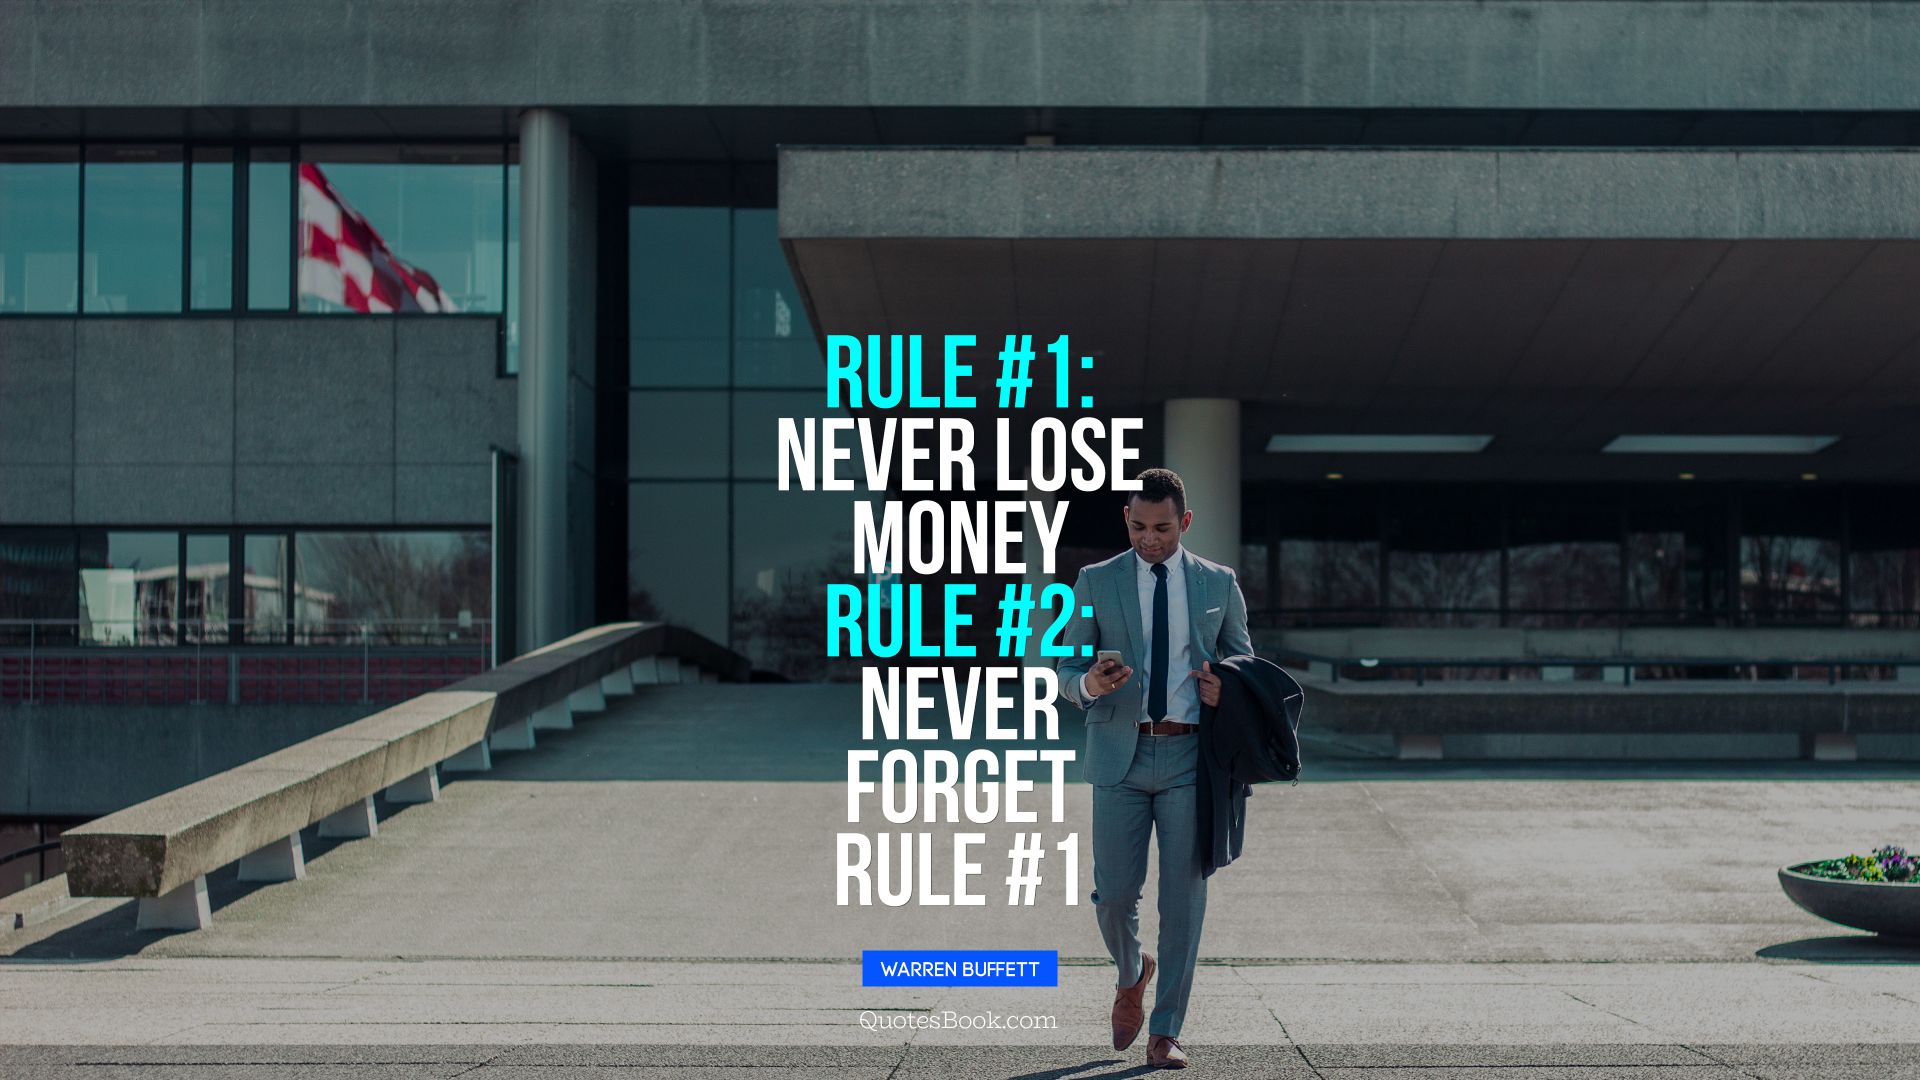 Rule 1: Never lose money. Rule 2: Never forget rule 1. - Quote by Warren Buffett 